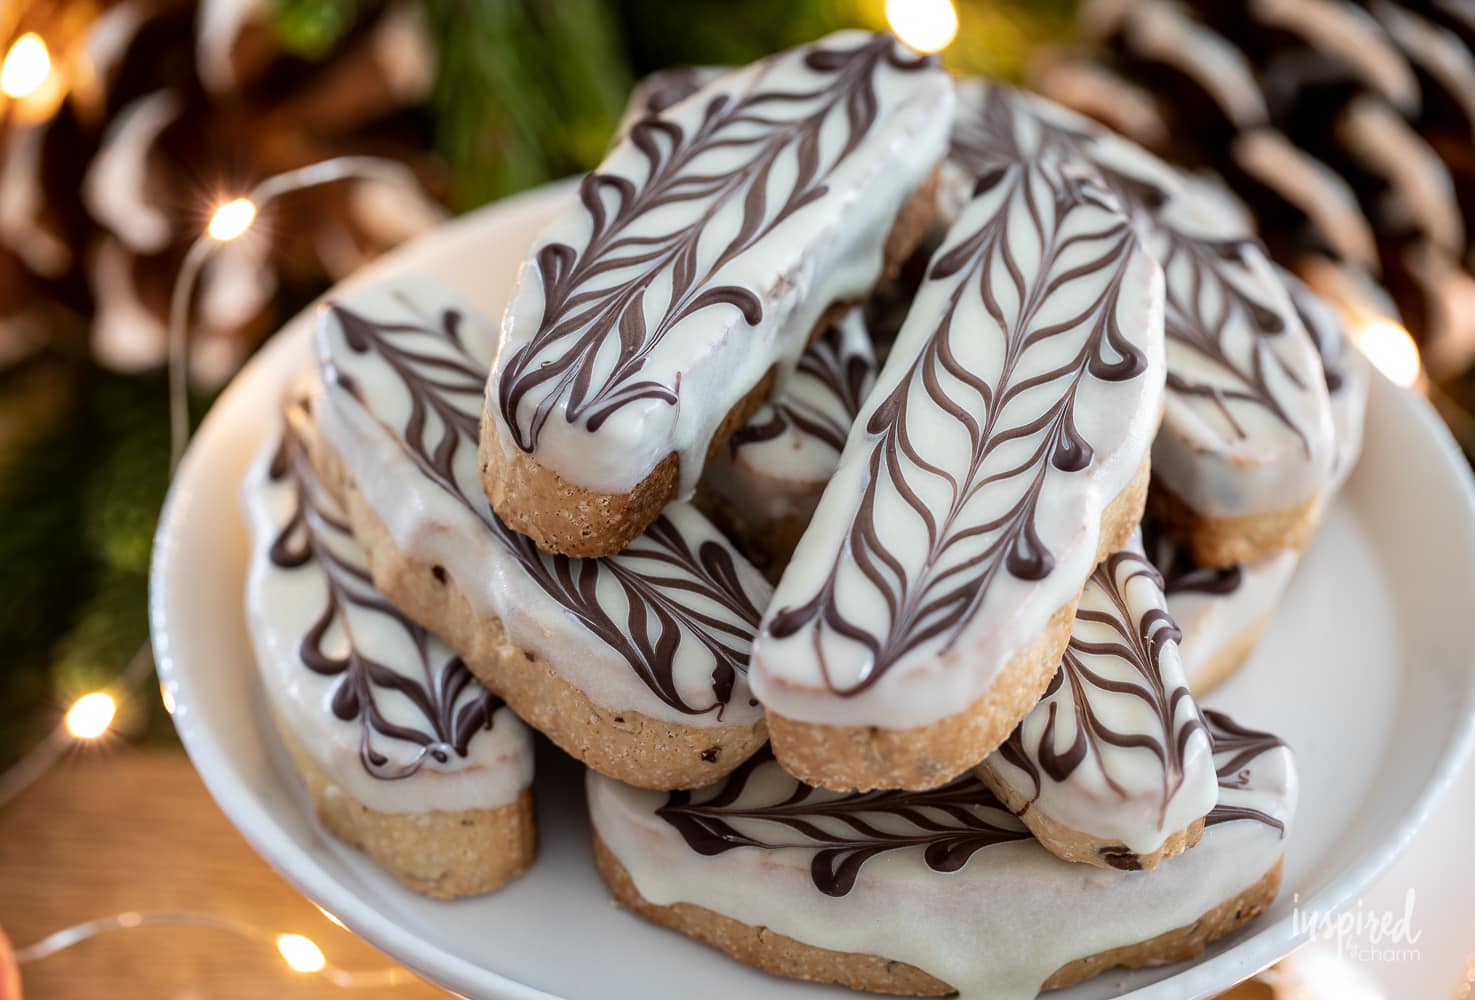 Almond and Hazelnut Biscotti #homemade #biscotti #almond #hazelnut #coffee #dessert #recipe